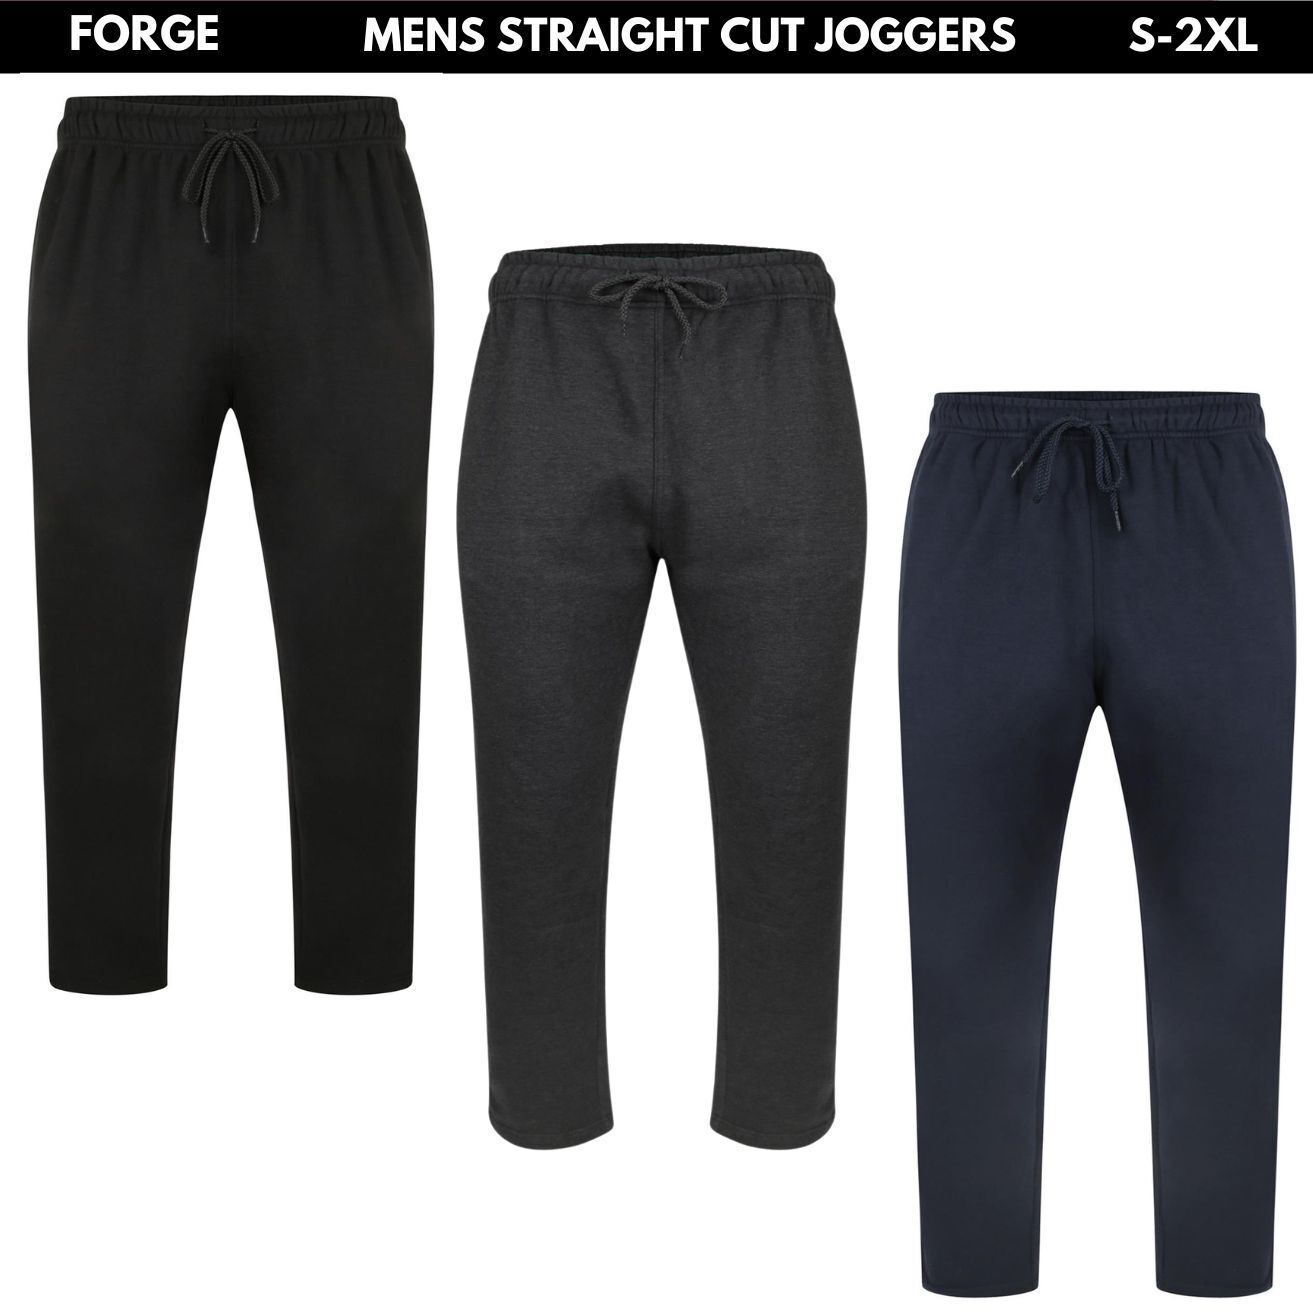 Mens Straight Leg Joggers Regular Fit Trousers Bottom Track Pants Size S-2XL